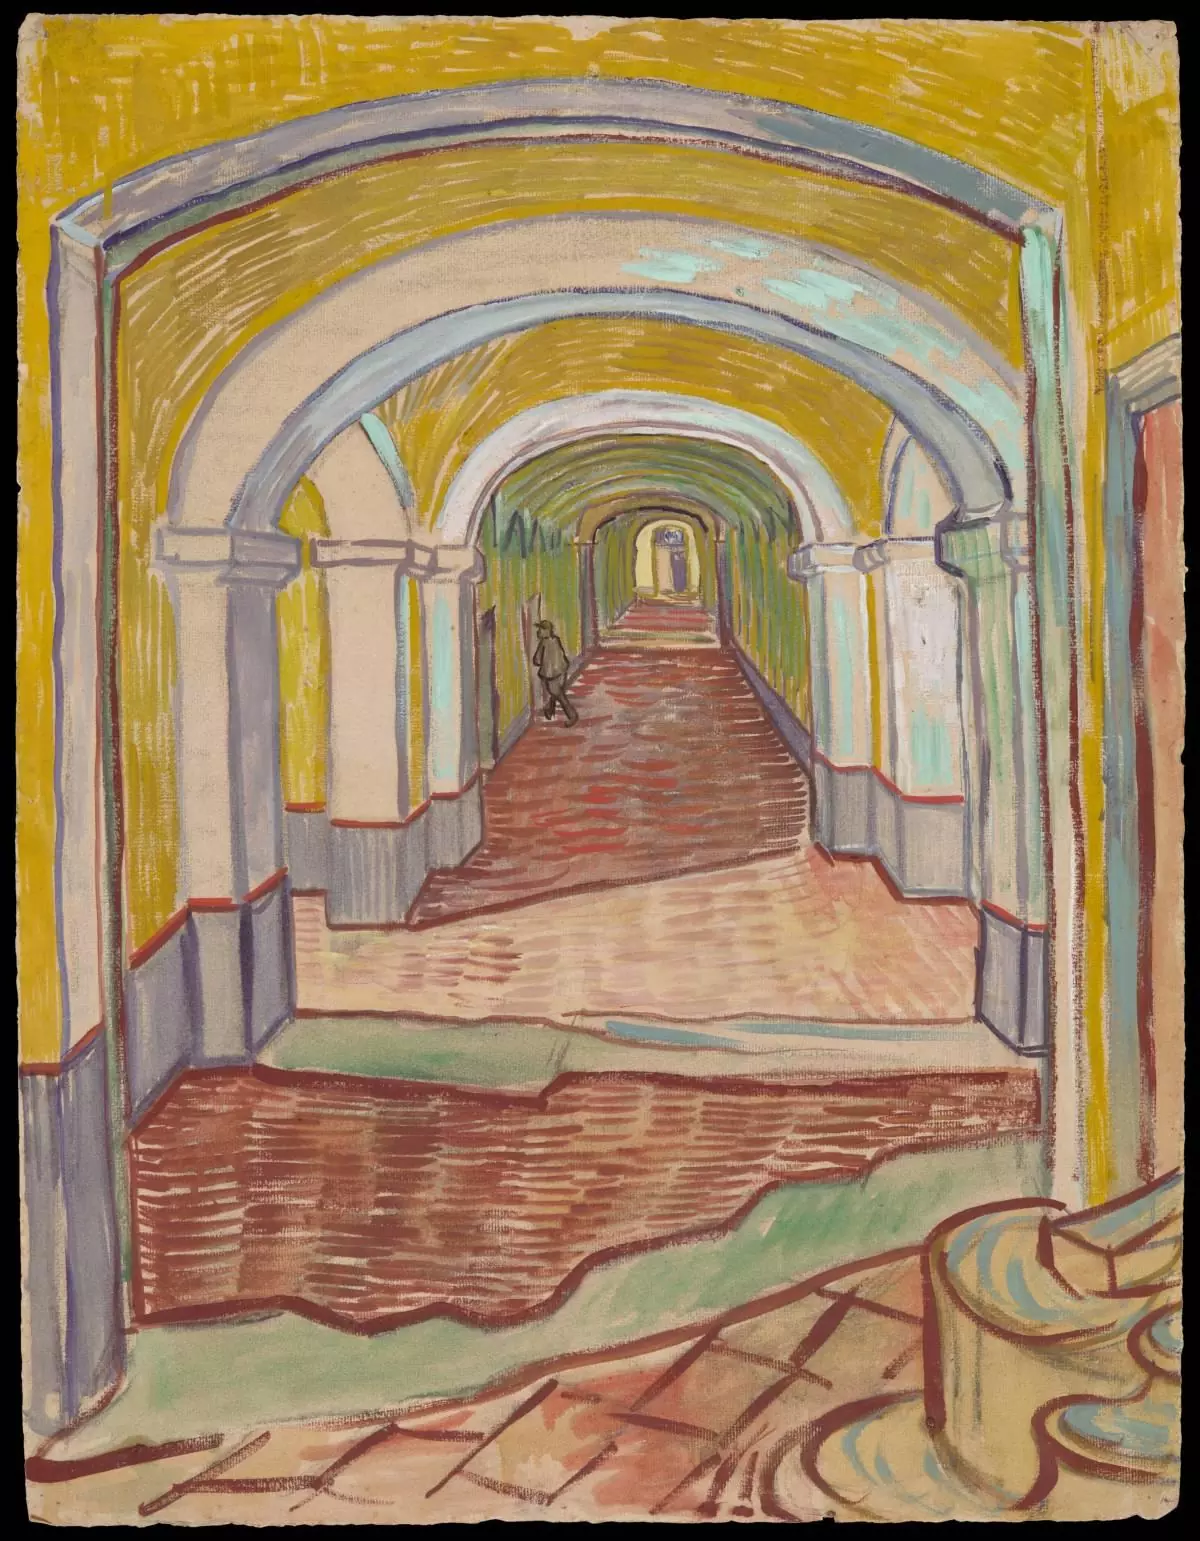 Corridor drawing by Van Gogh